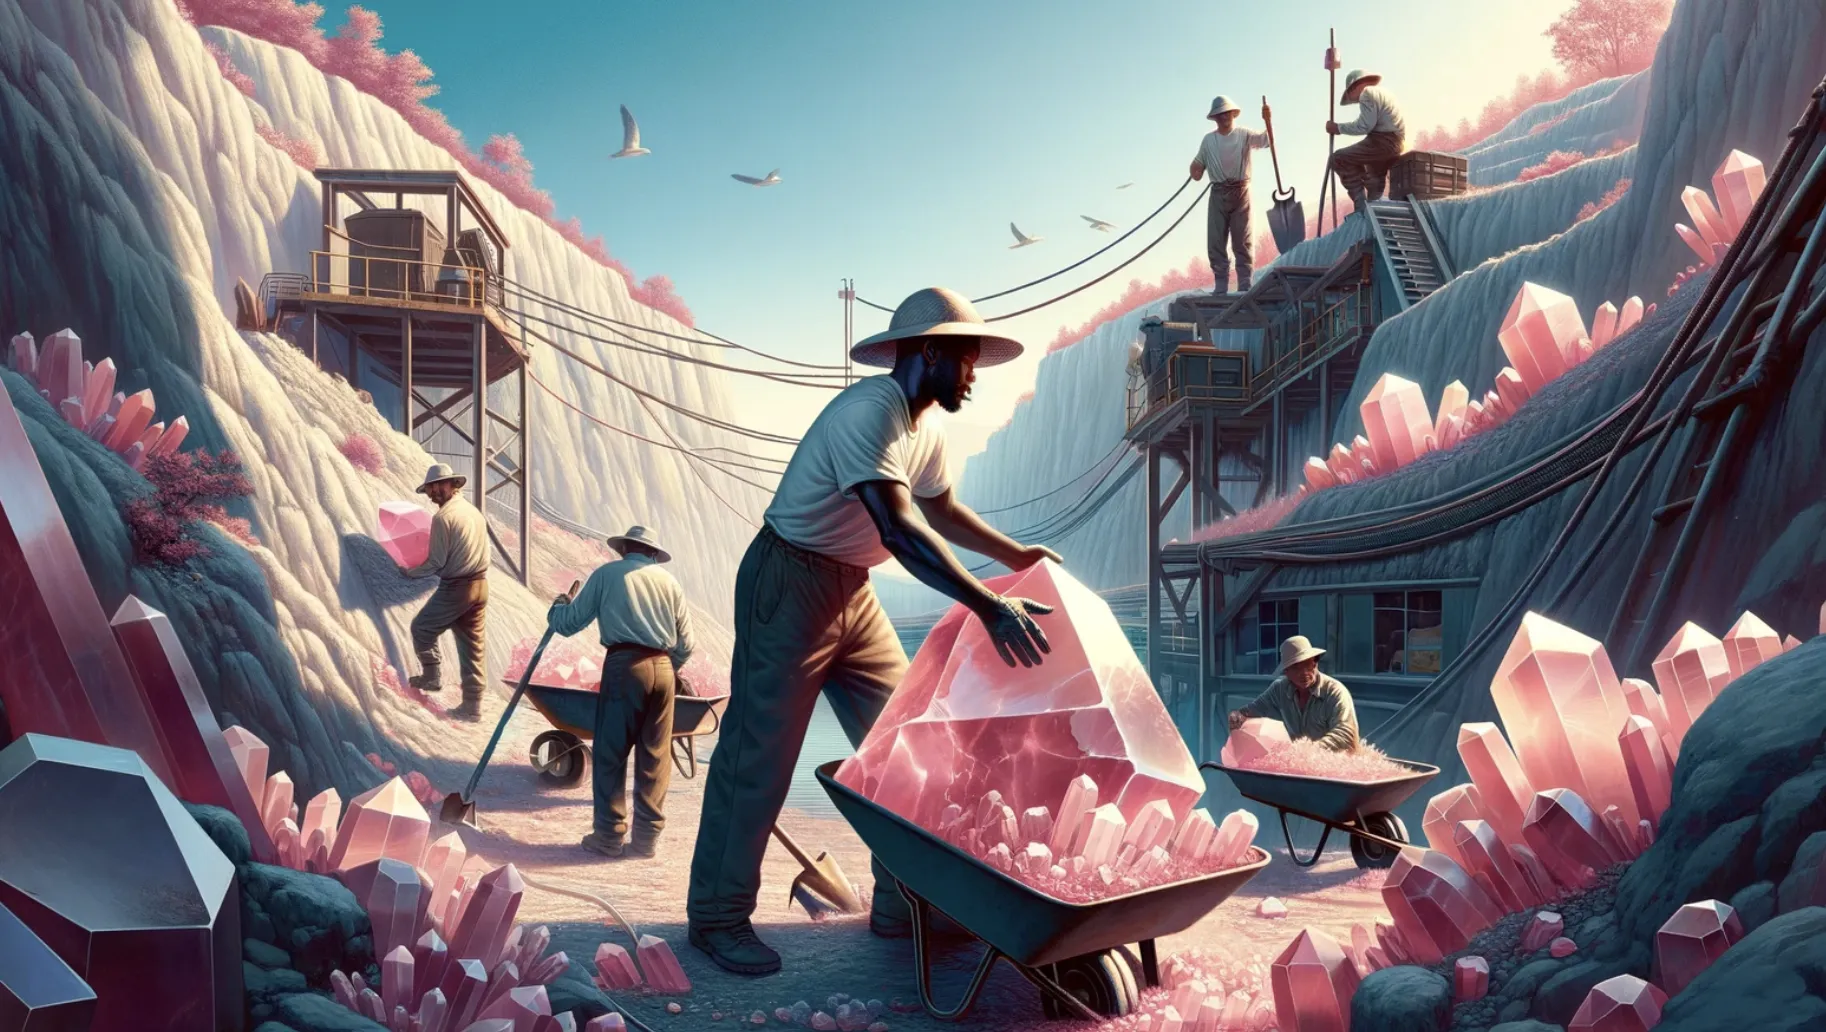 cartoonish image showing the mining of rose quartz crystals